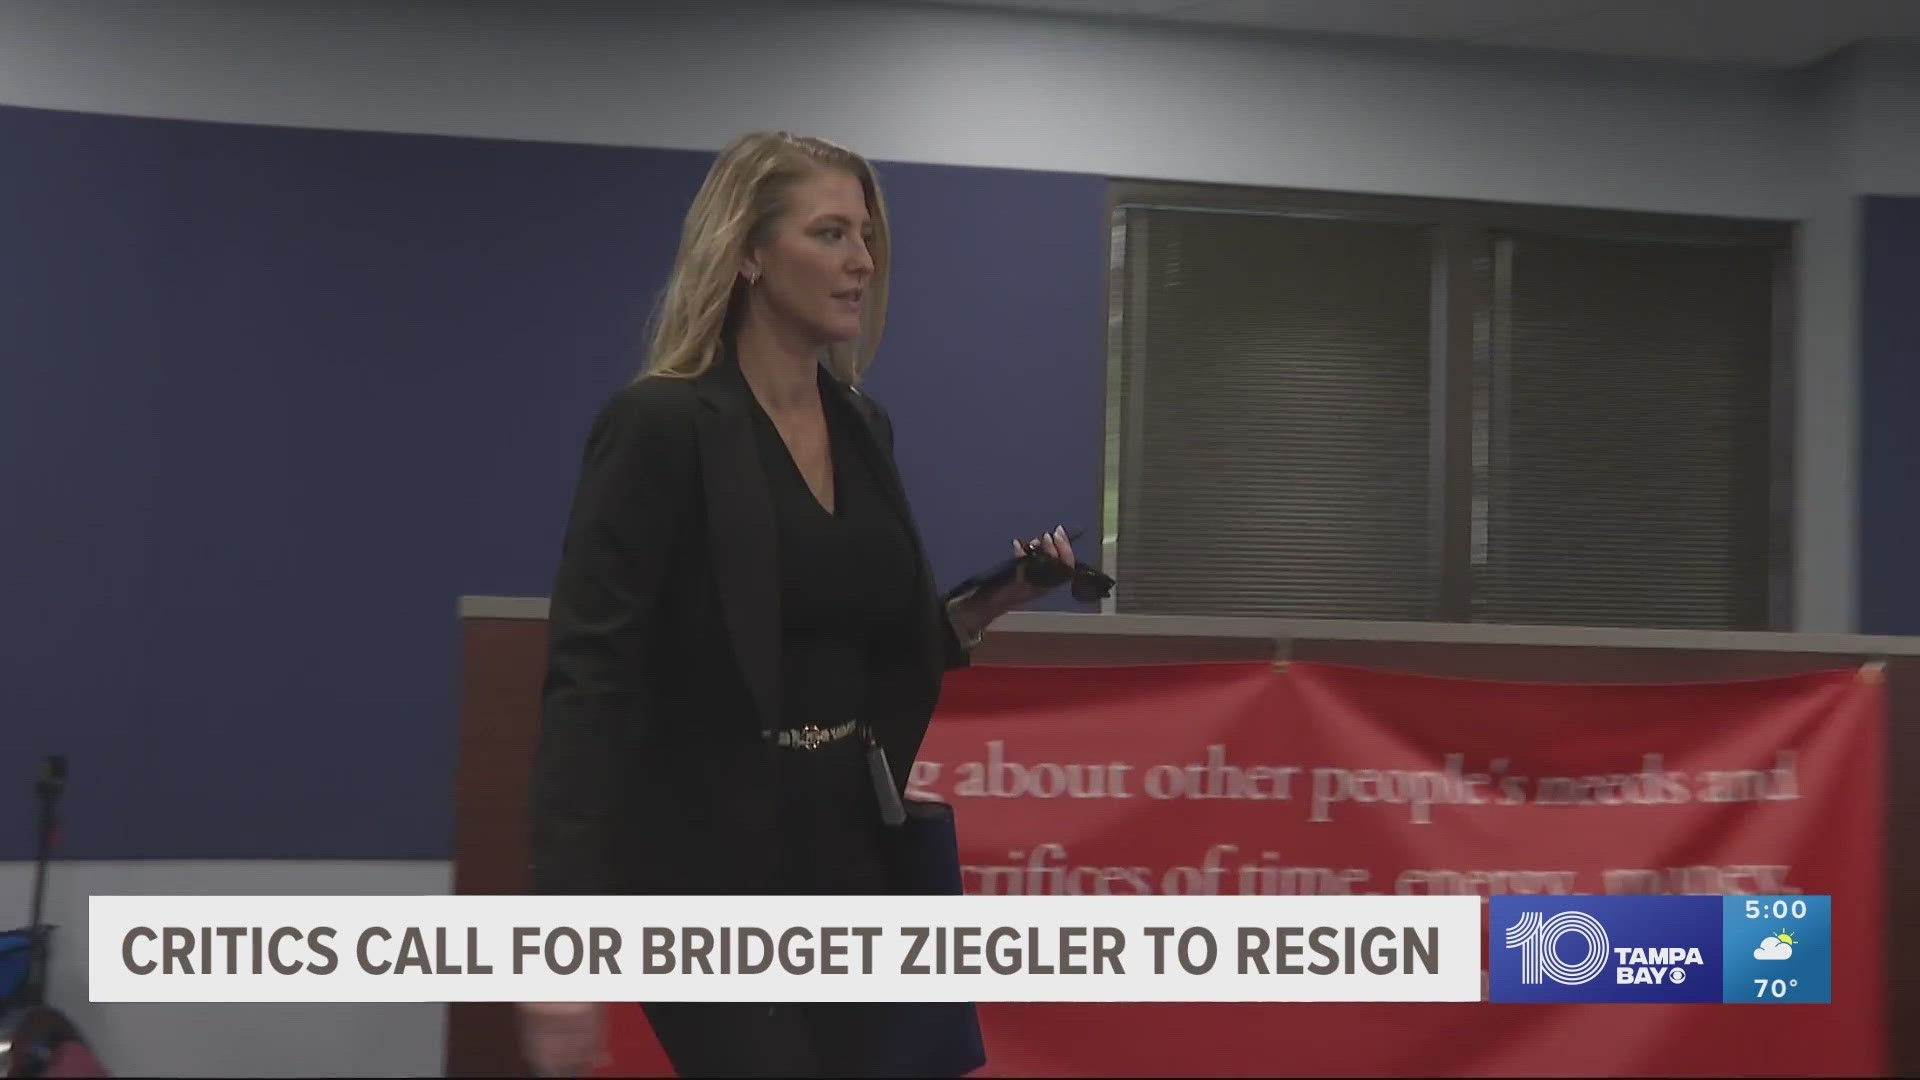 Bridget Ziegler stands up against woke agenda, gender confusion